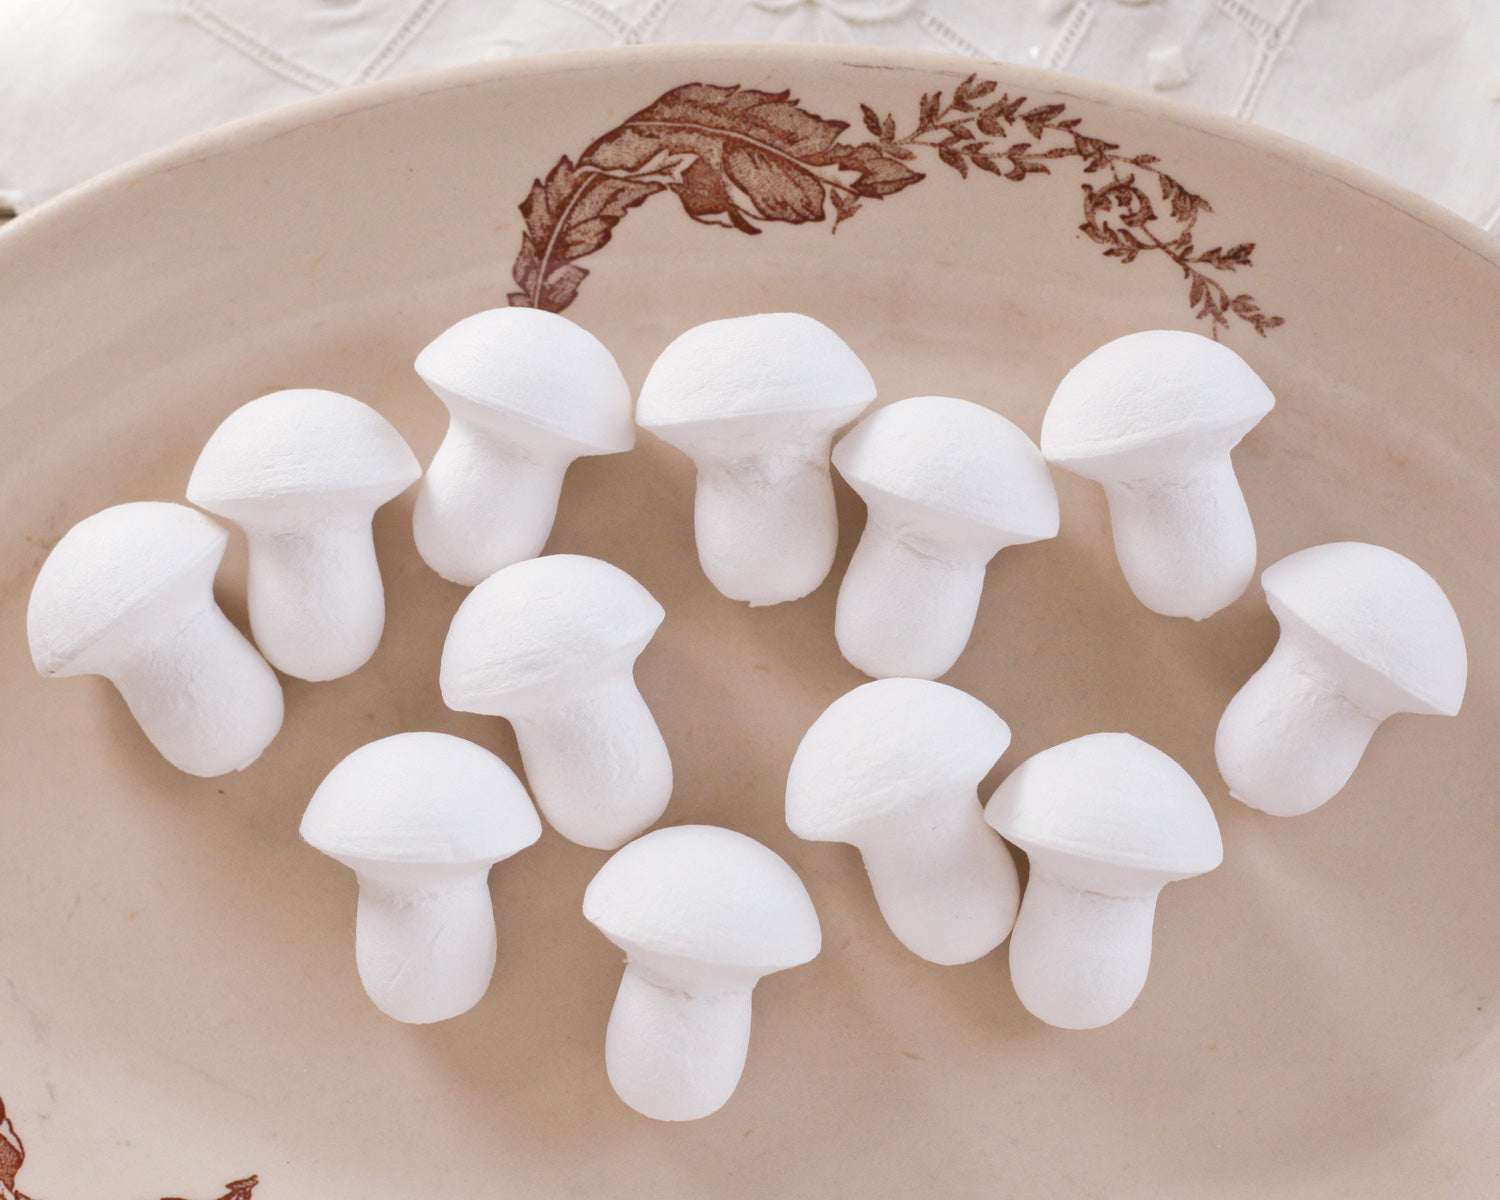 Large Button Mushrooms - 40 x 32mm Spun Cotton Craft Shapes, 12 Pcs.